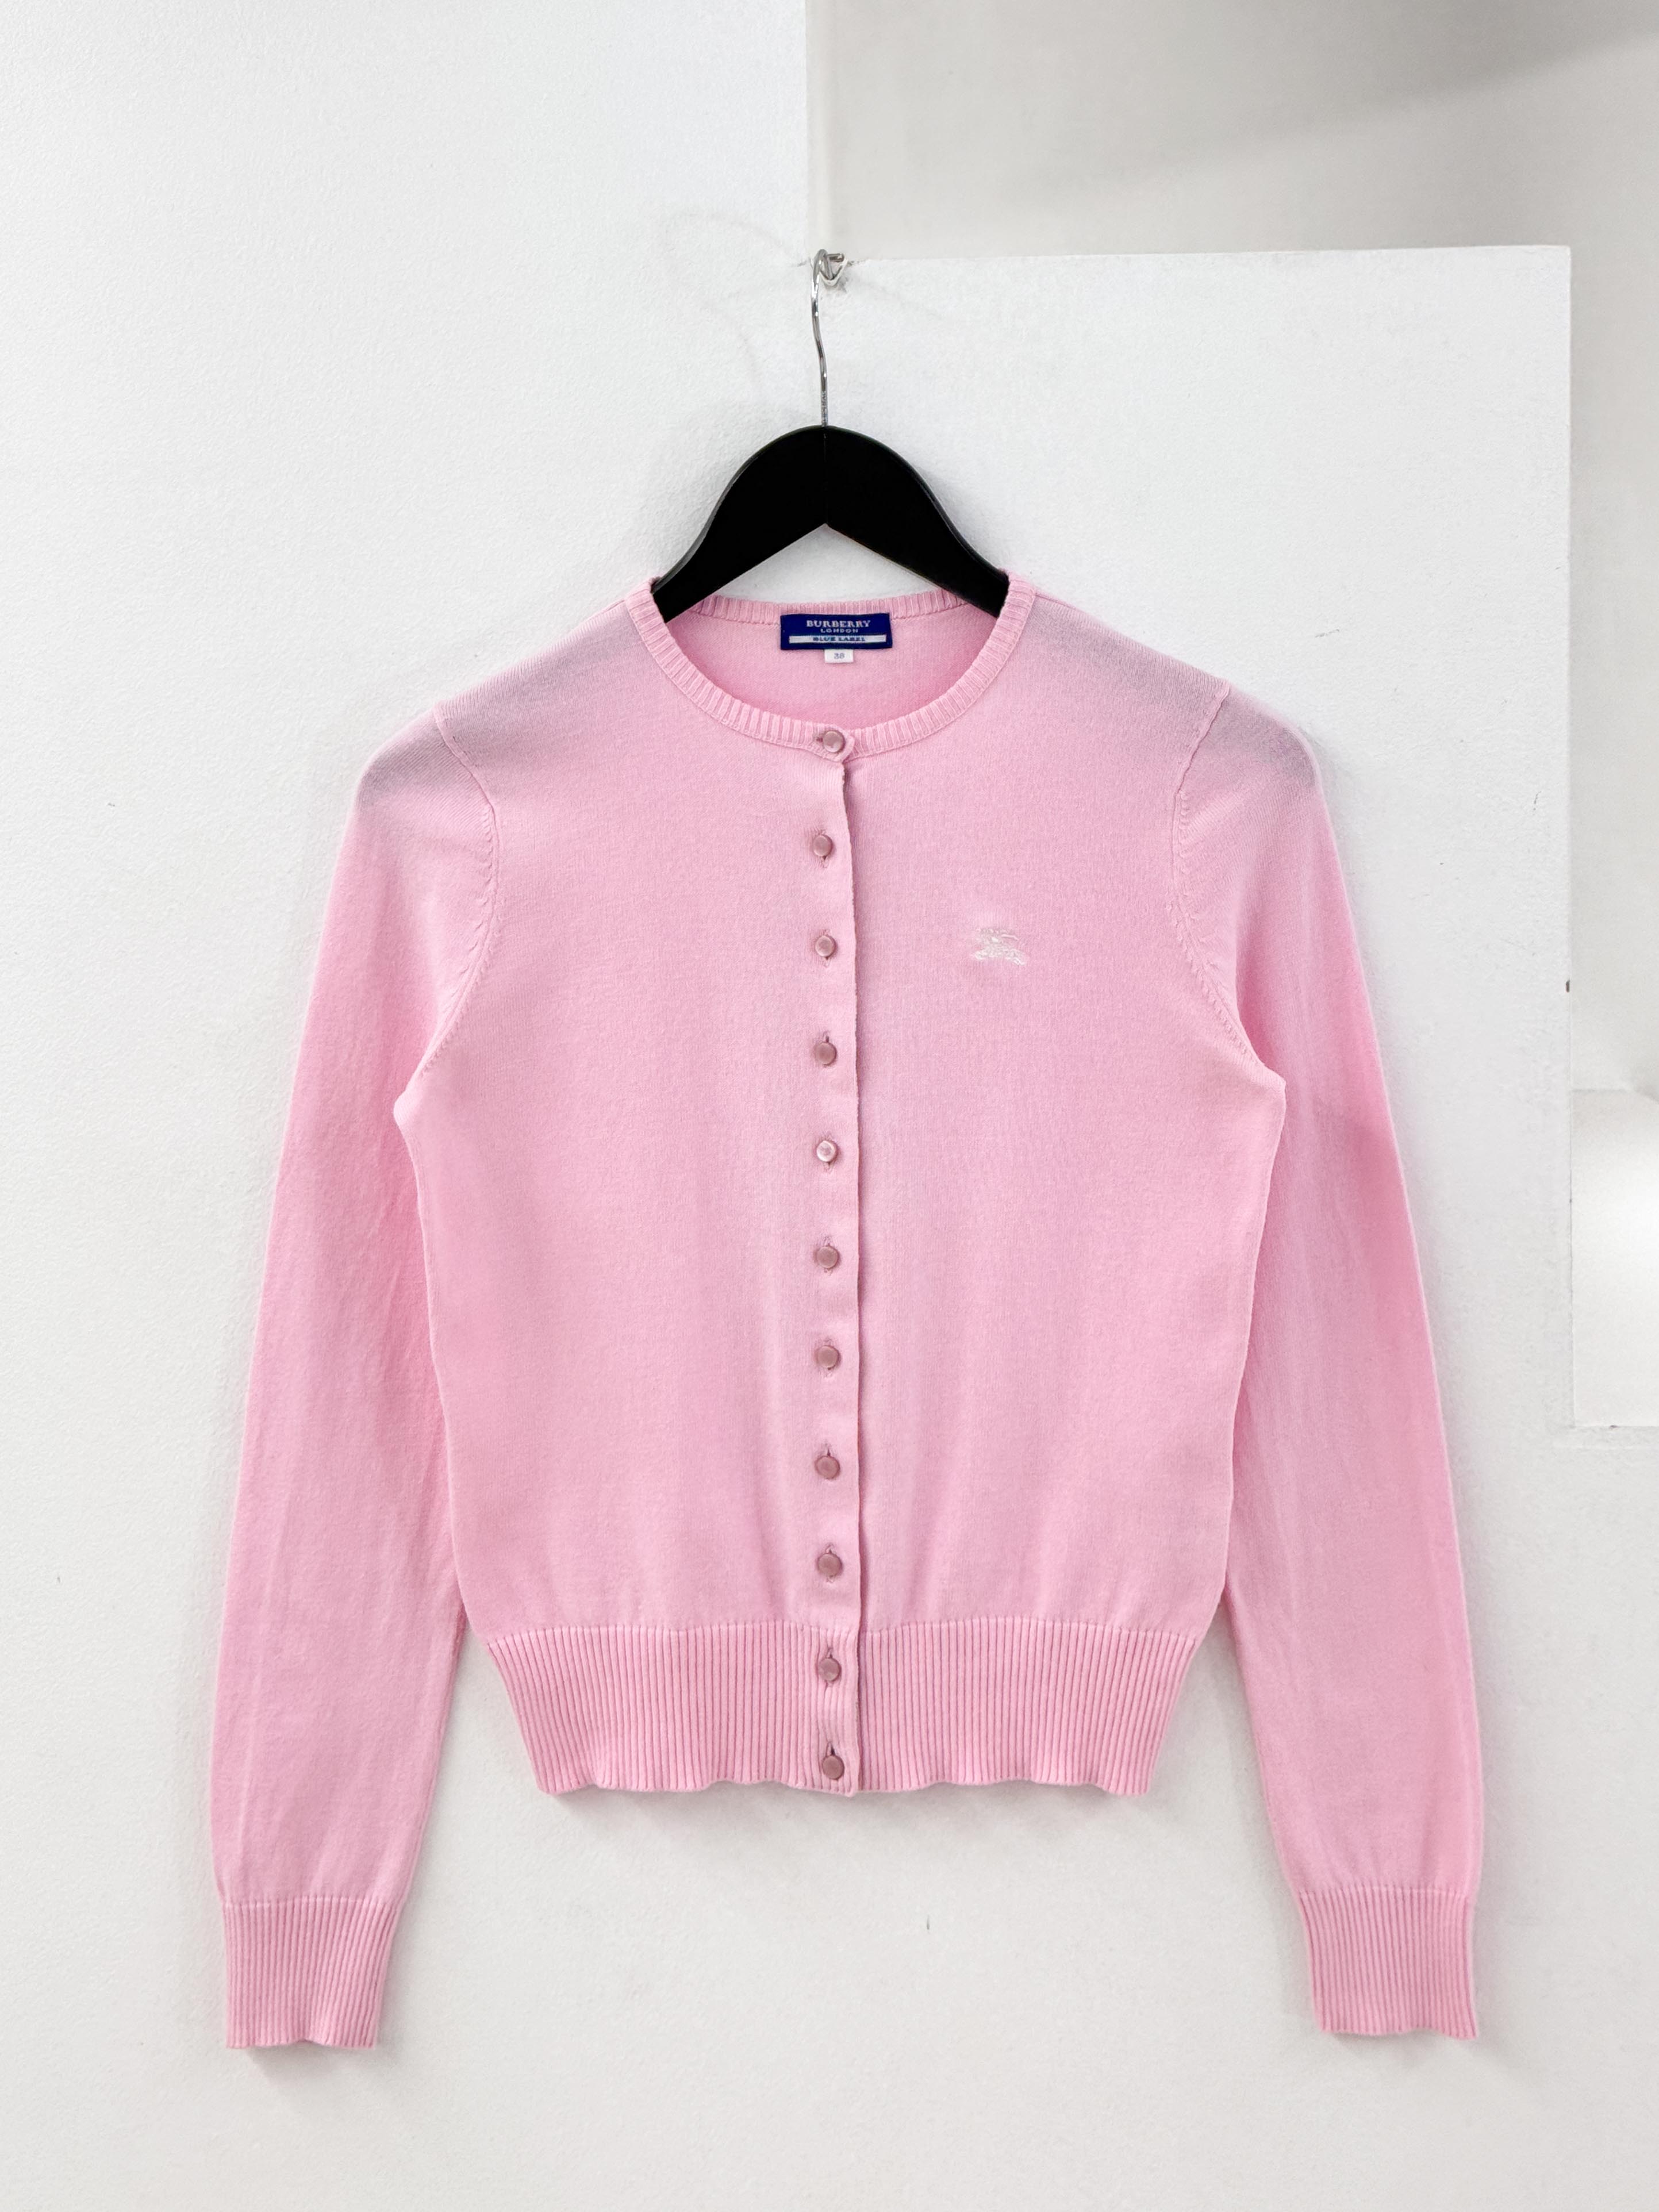 Burberry pink cardigan